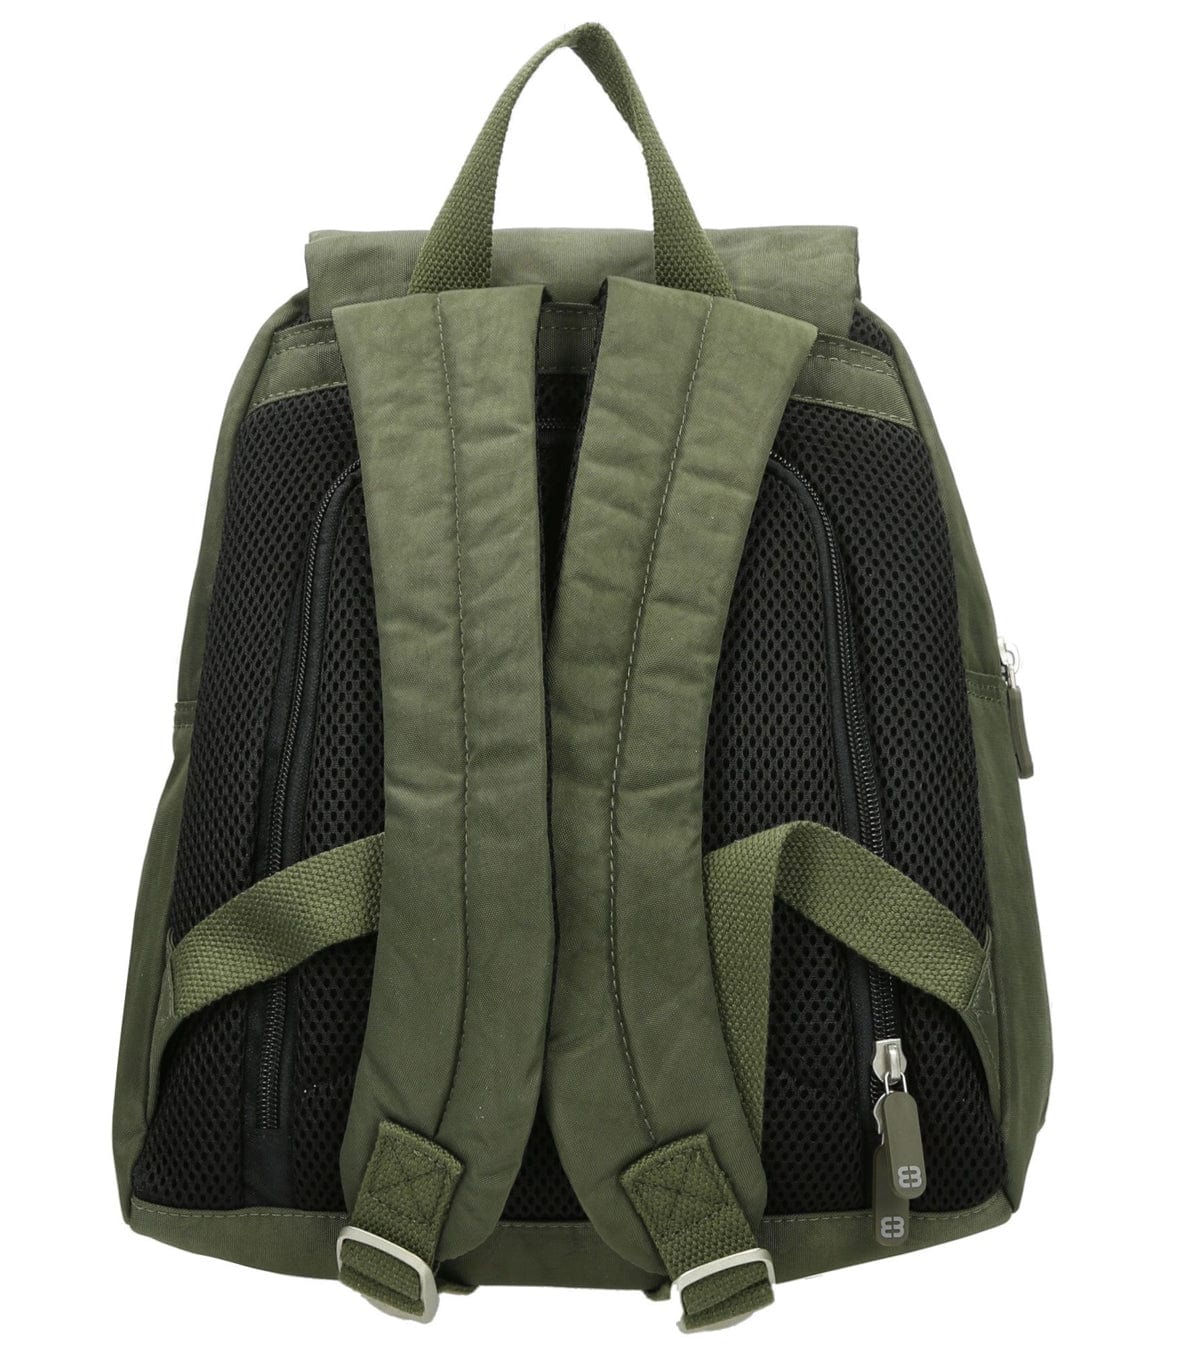 Wandel rugzak / City backpack lichtgewicht kleur Olive